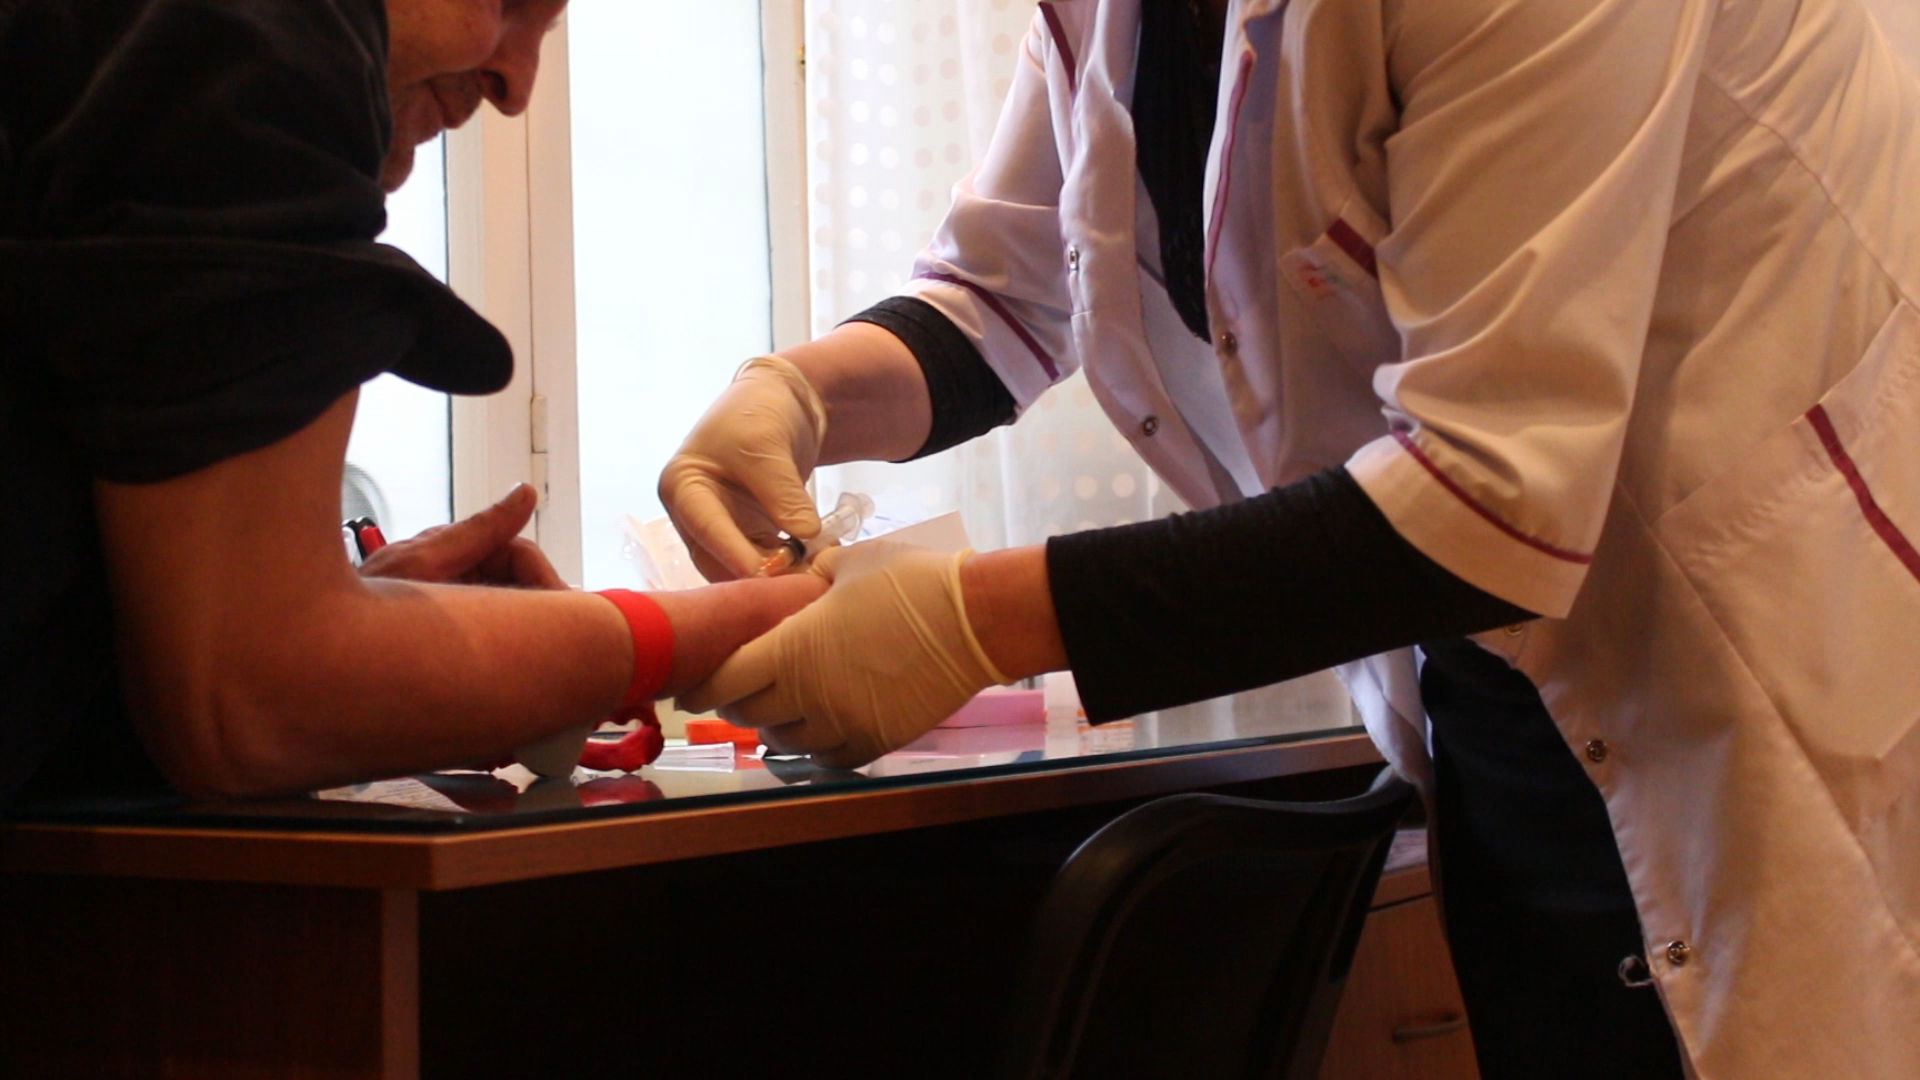 Анализ крови на ВИЧ в сервис-центре "НЕРА+", фото: Нино Меманишвили, JAMnews 